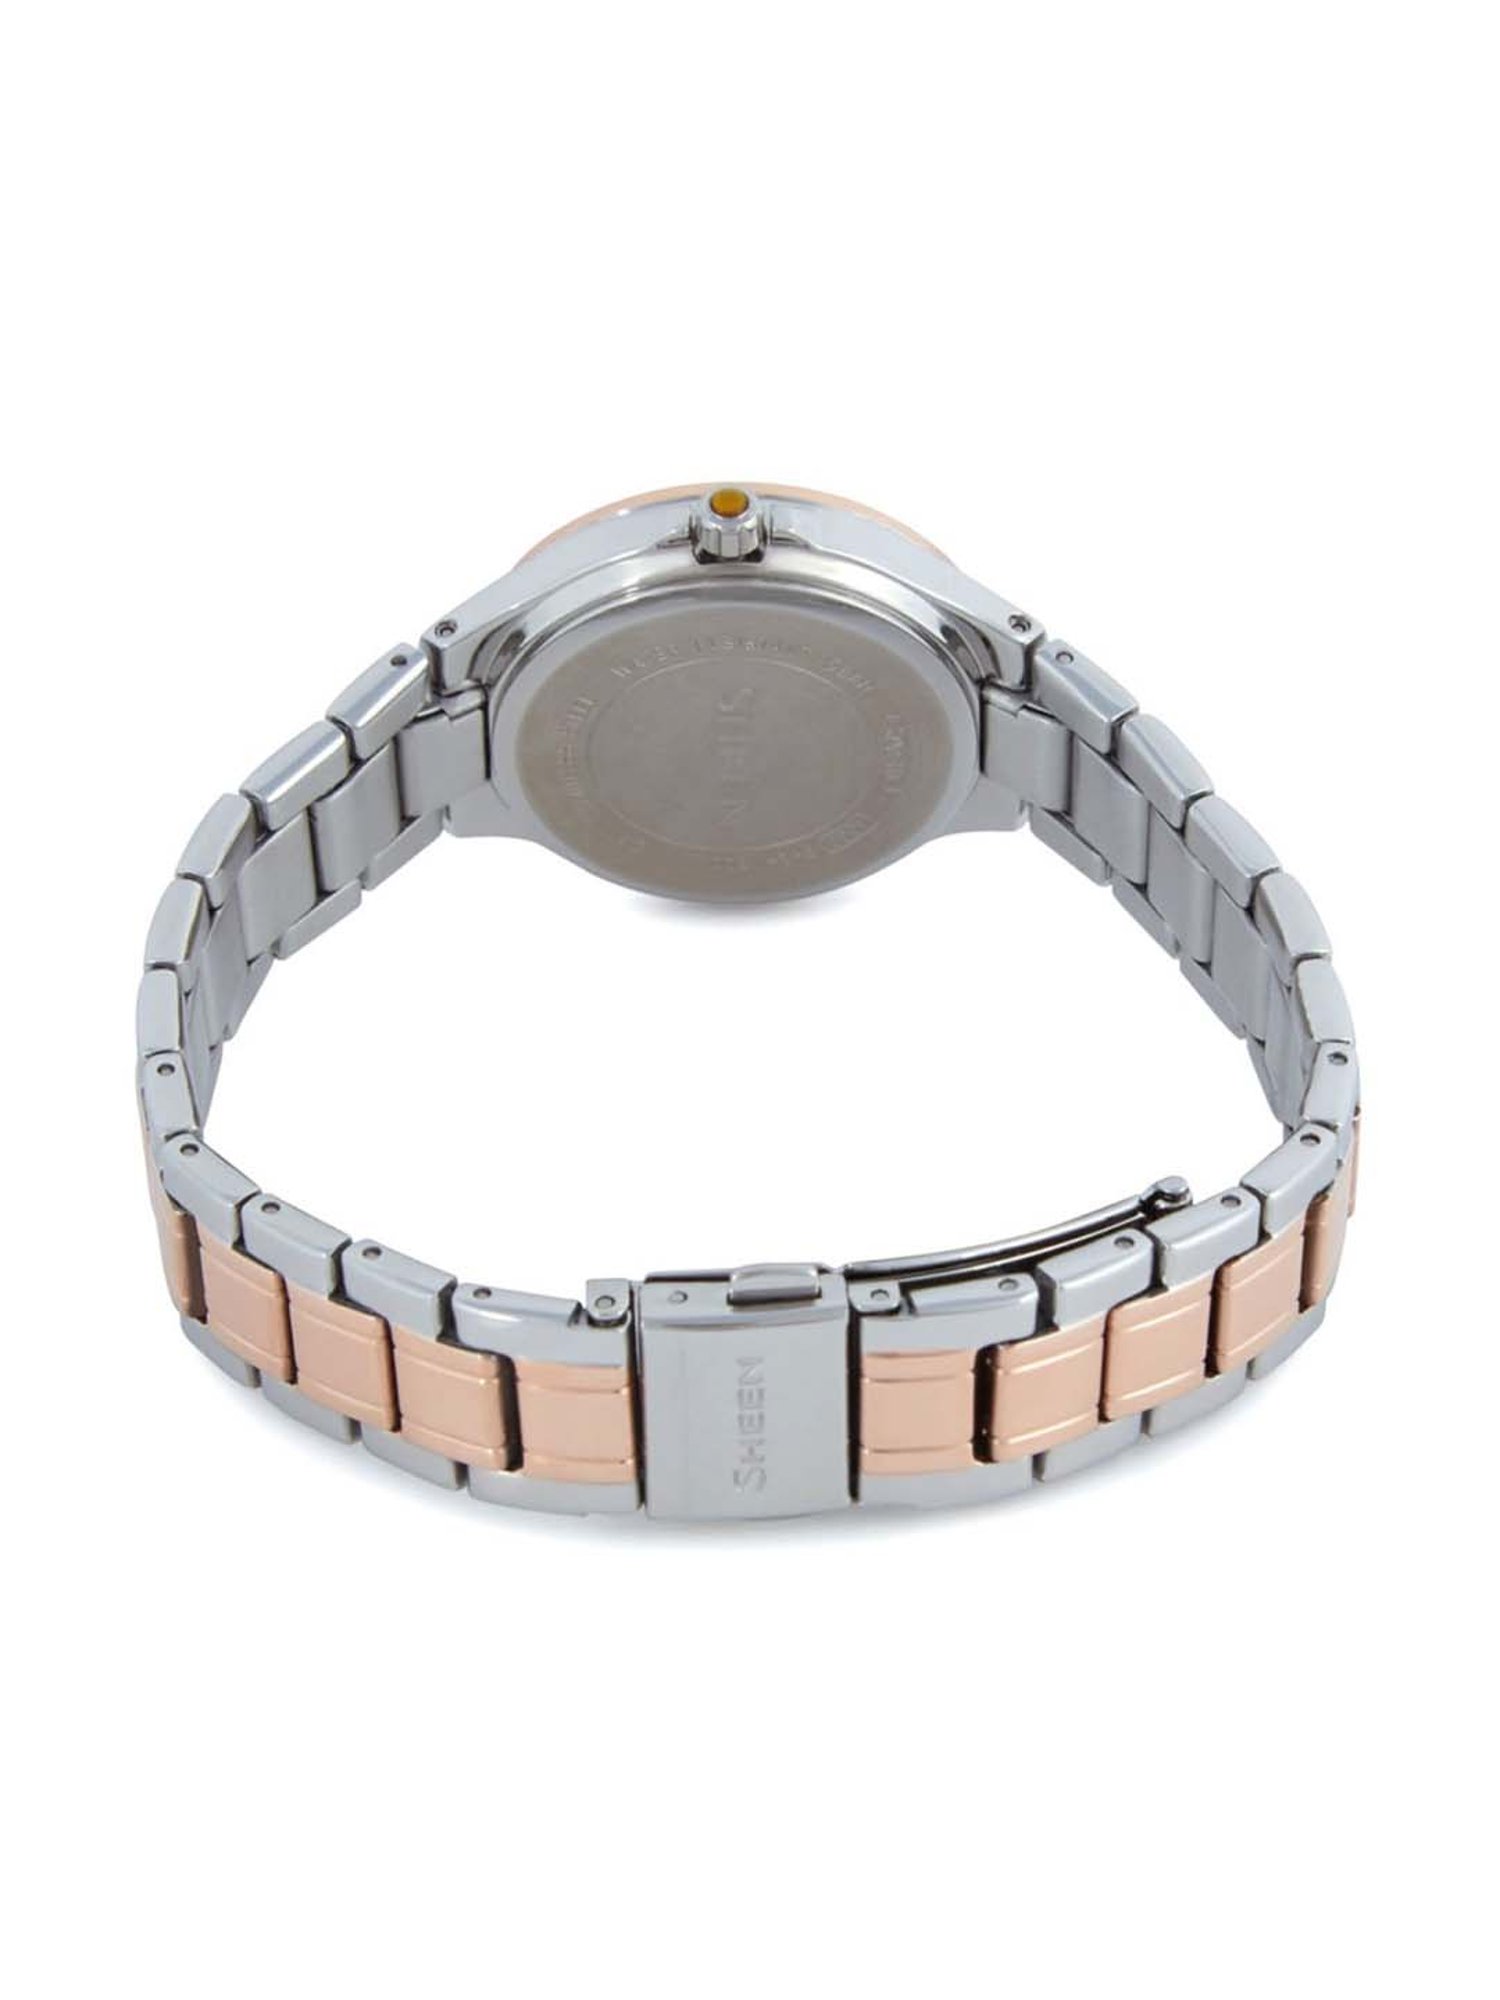 Buy Best casio sheen Wrist Watches Girls/Women| watchbrand.in